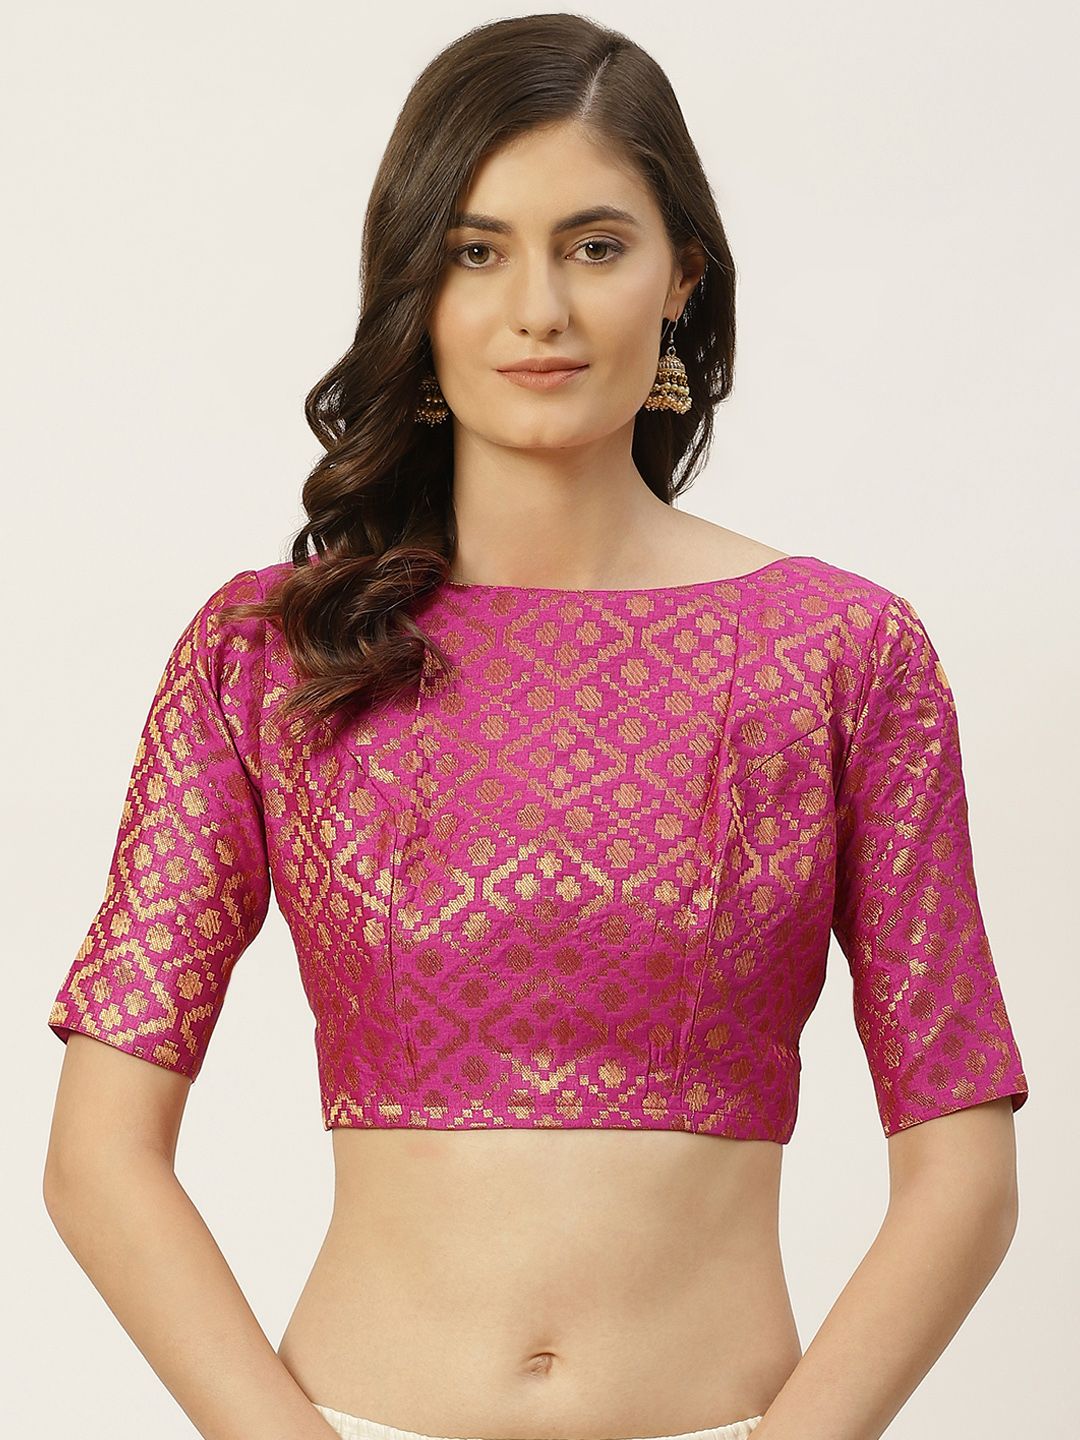 Studio Shringaar Pink & Golden Brocade Woven Design Saree Blouse Price in India